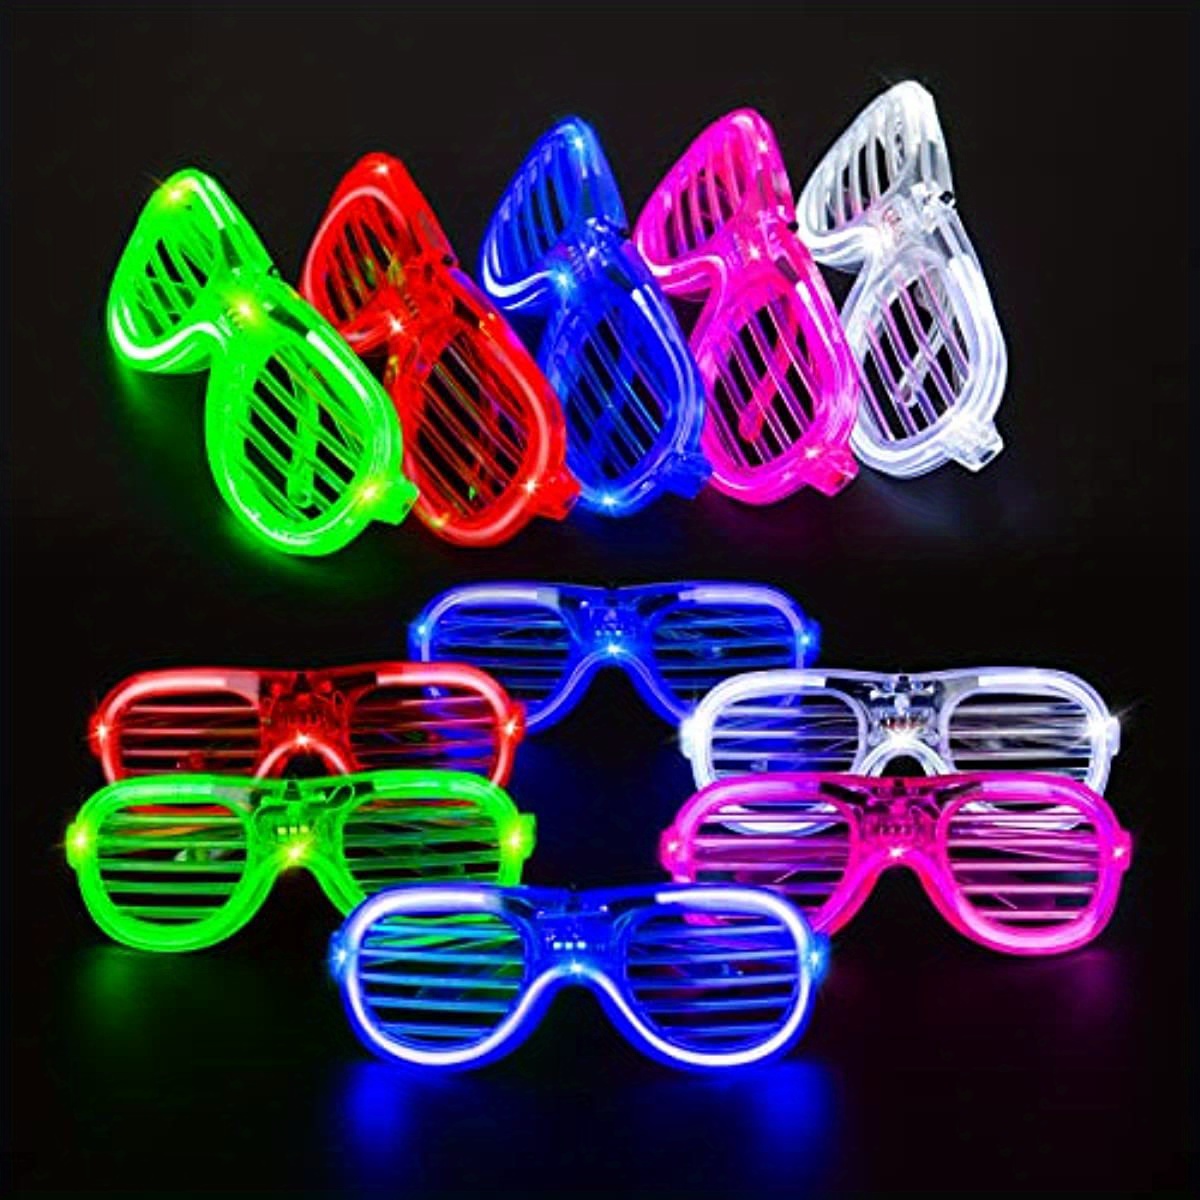 Max Fun Led Light Up Glasses Toys 60 Plastic Shutter Shades Glasses Led  Flashing Glow in